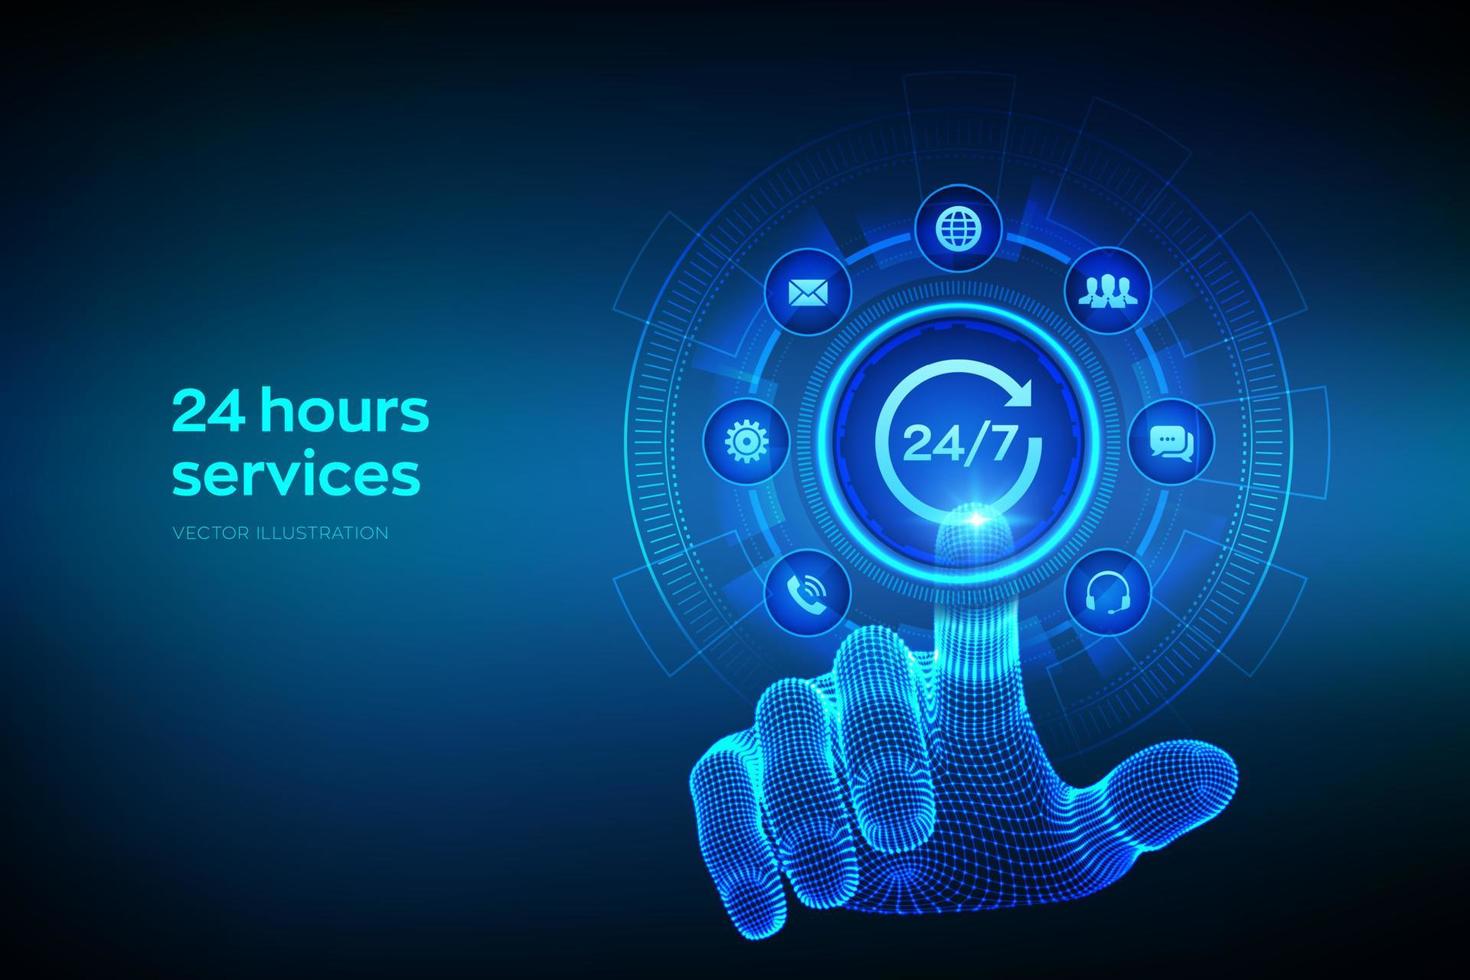 24 horas servicios 24-7 apoyo. técnico apoyo. cliente ayuda. tecnología apoyo. cliente servicio, negocio y tecnología concepto. estructura metálica mano conmovedor digital interfaz. vector ilustración.